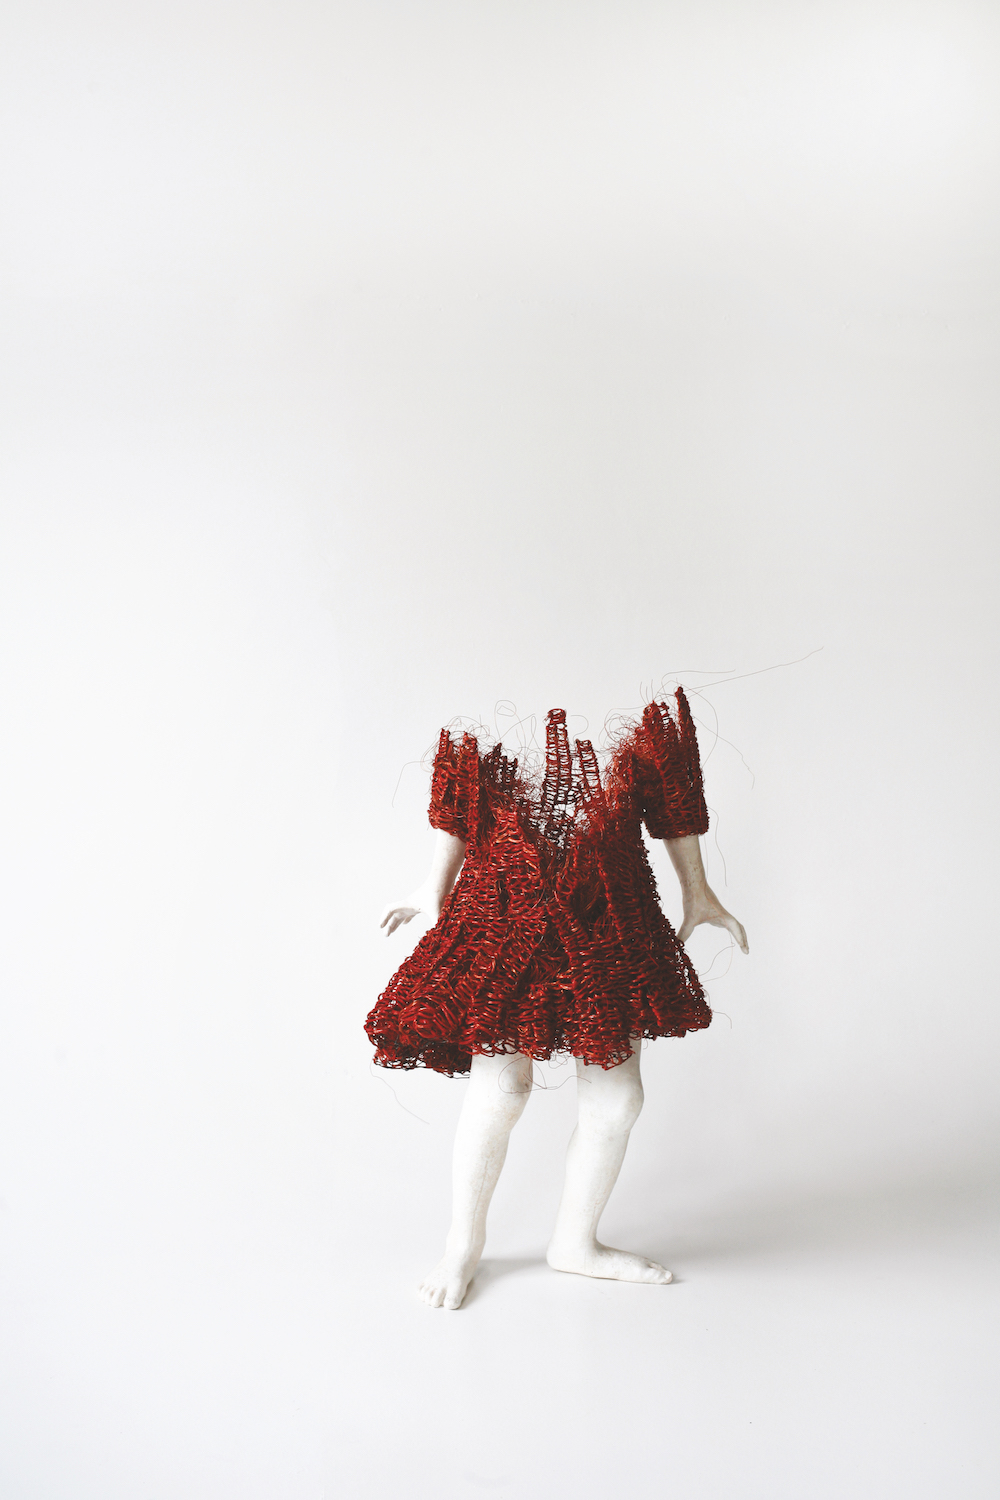 Kilde Lene untitled (red dress) 2023, copper,steel,concrete, 73x50x36 cm